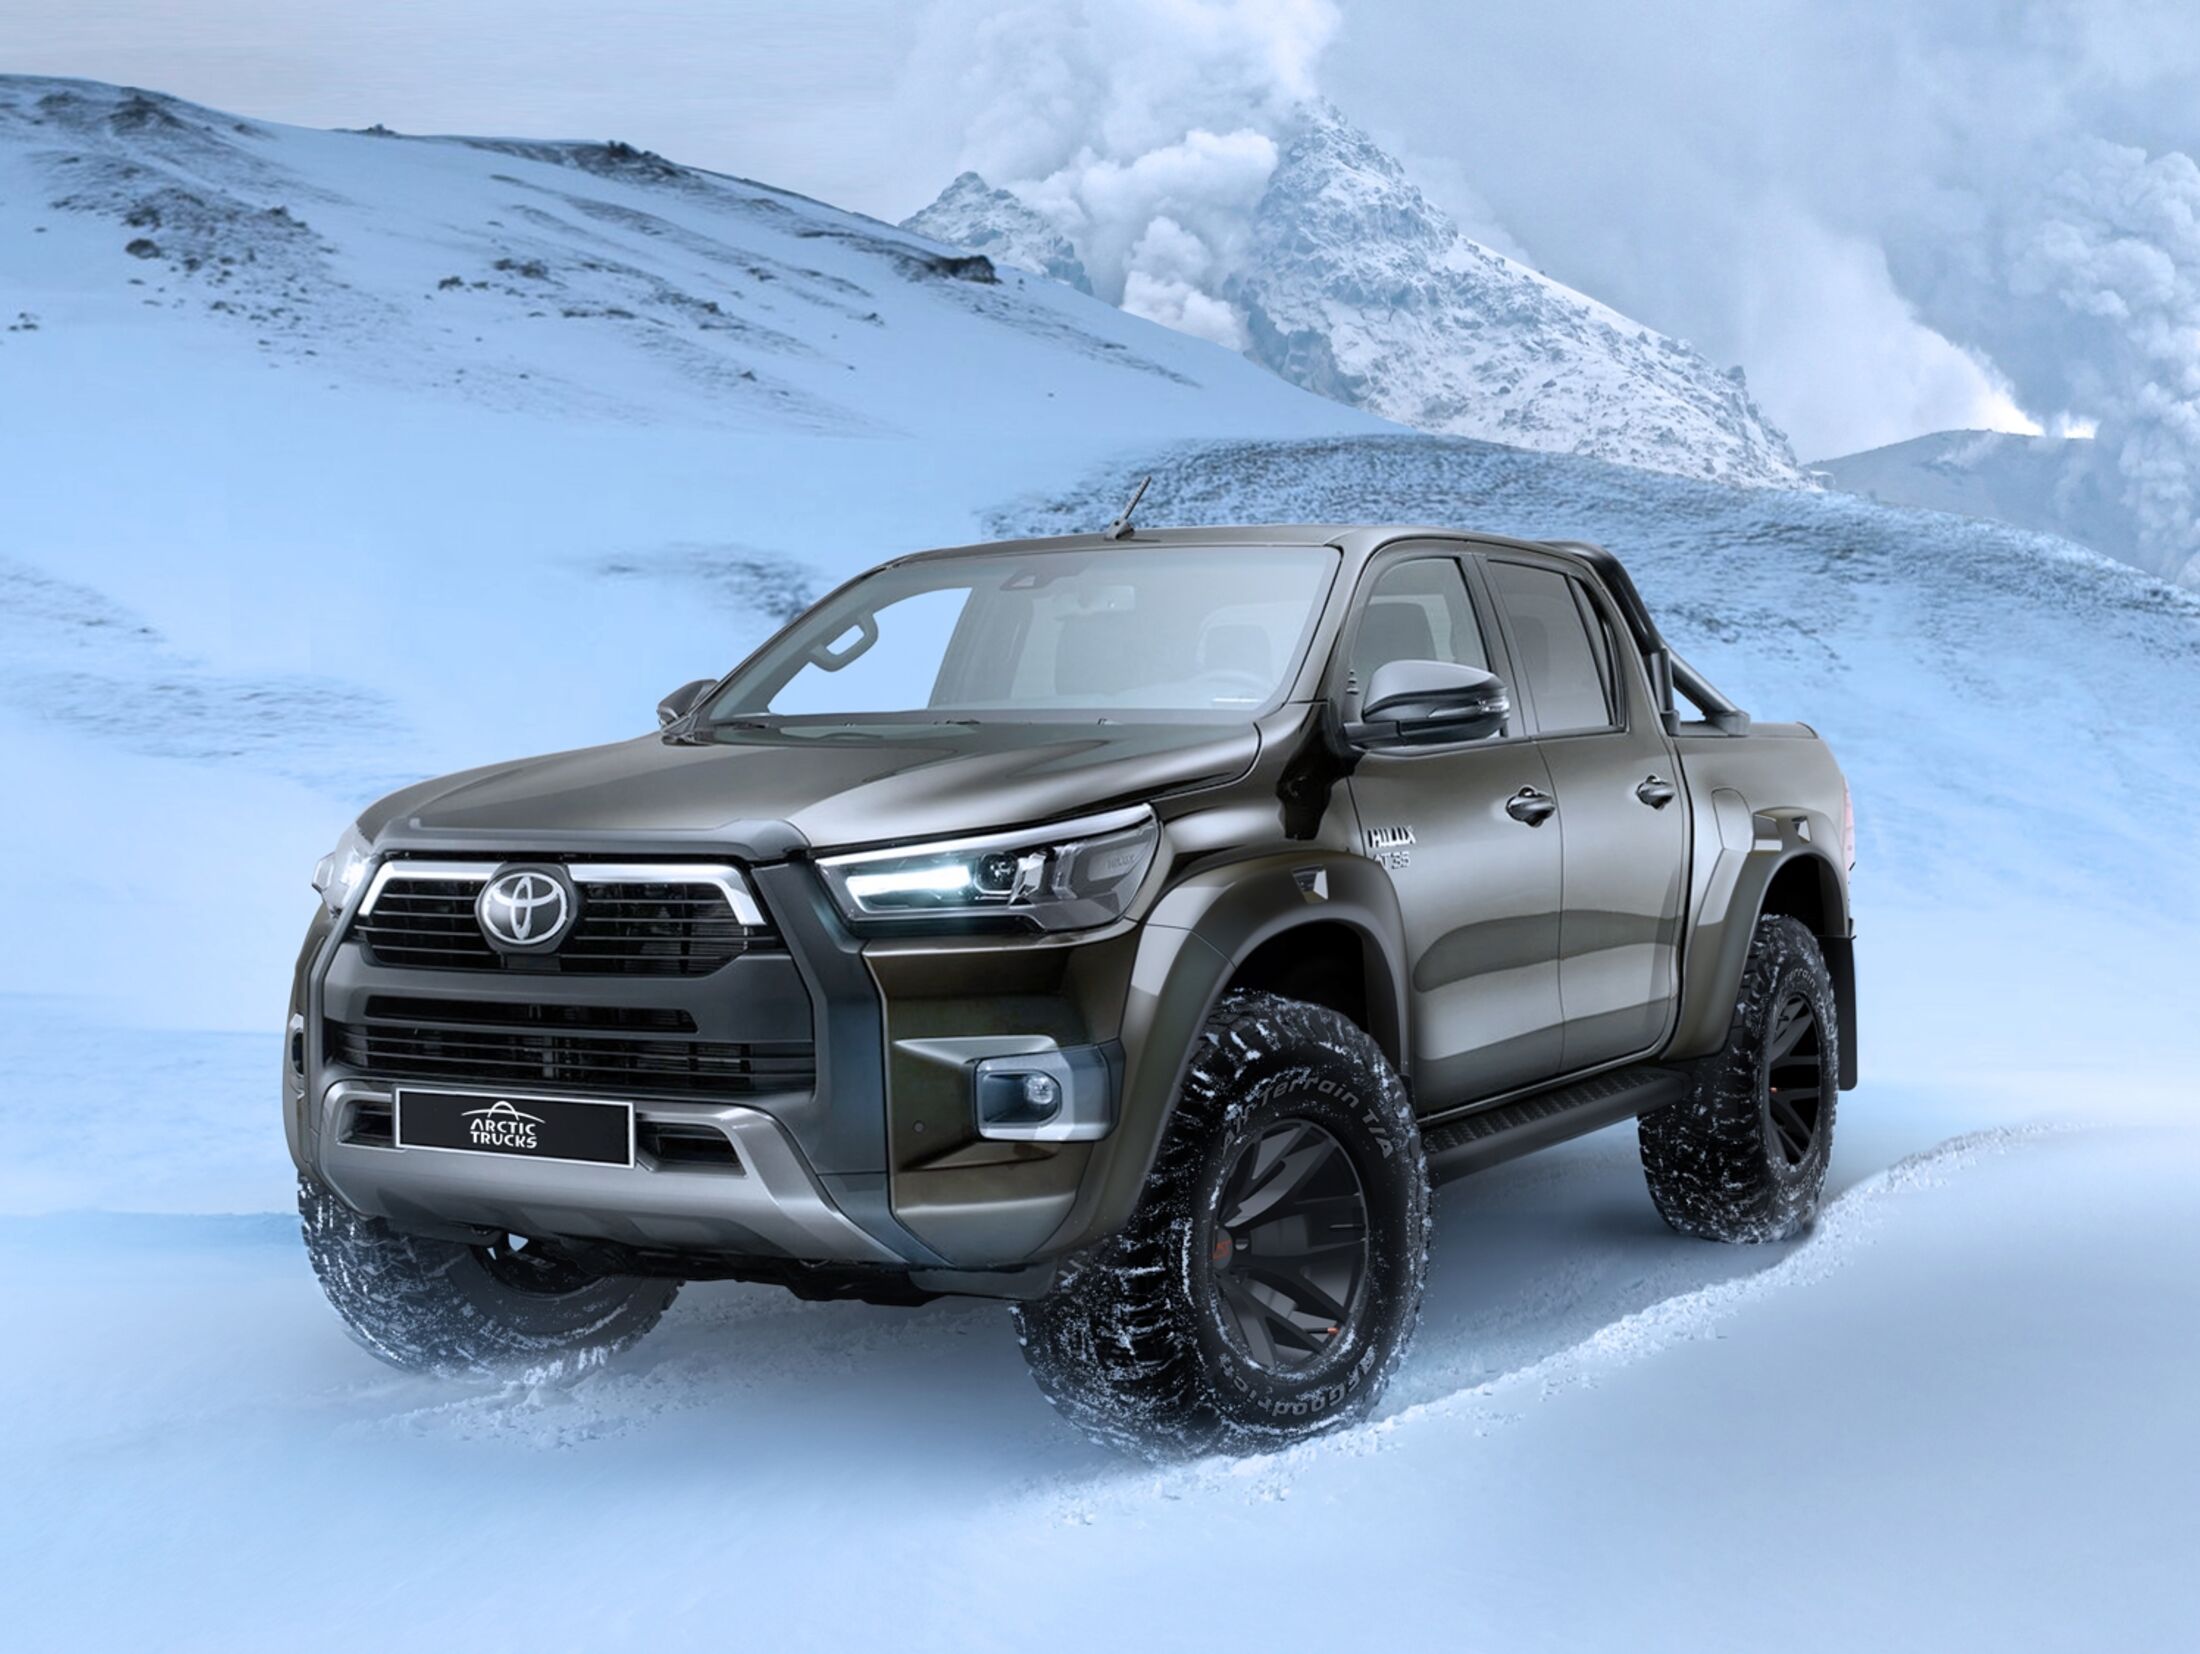 https://imgr1.auto-motor-und-sport.de/Arctic-Trucks-Toyota-Hilux-AT35-jsonLd4x3-478aaa7e-1767504.jpg